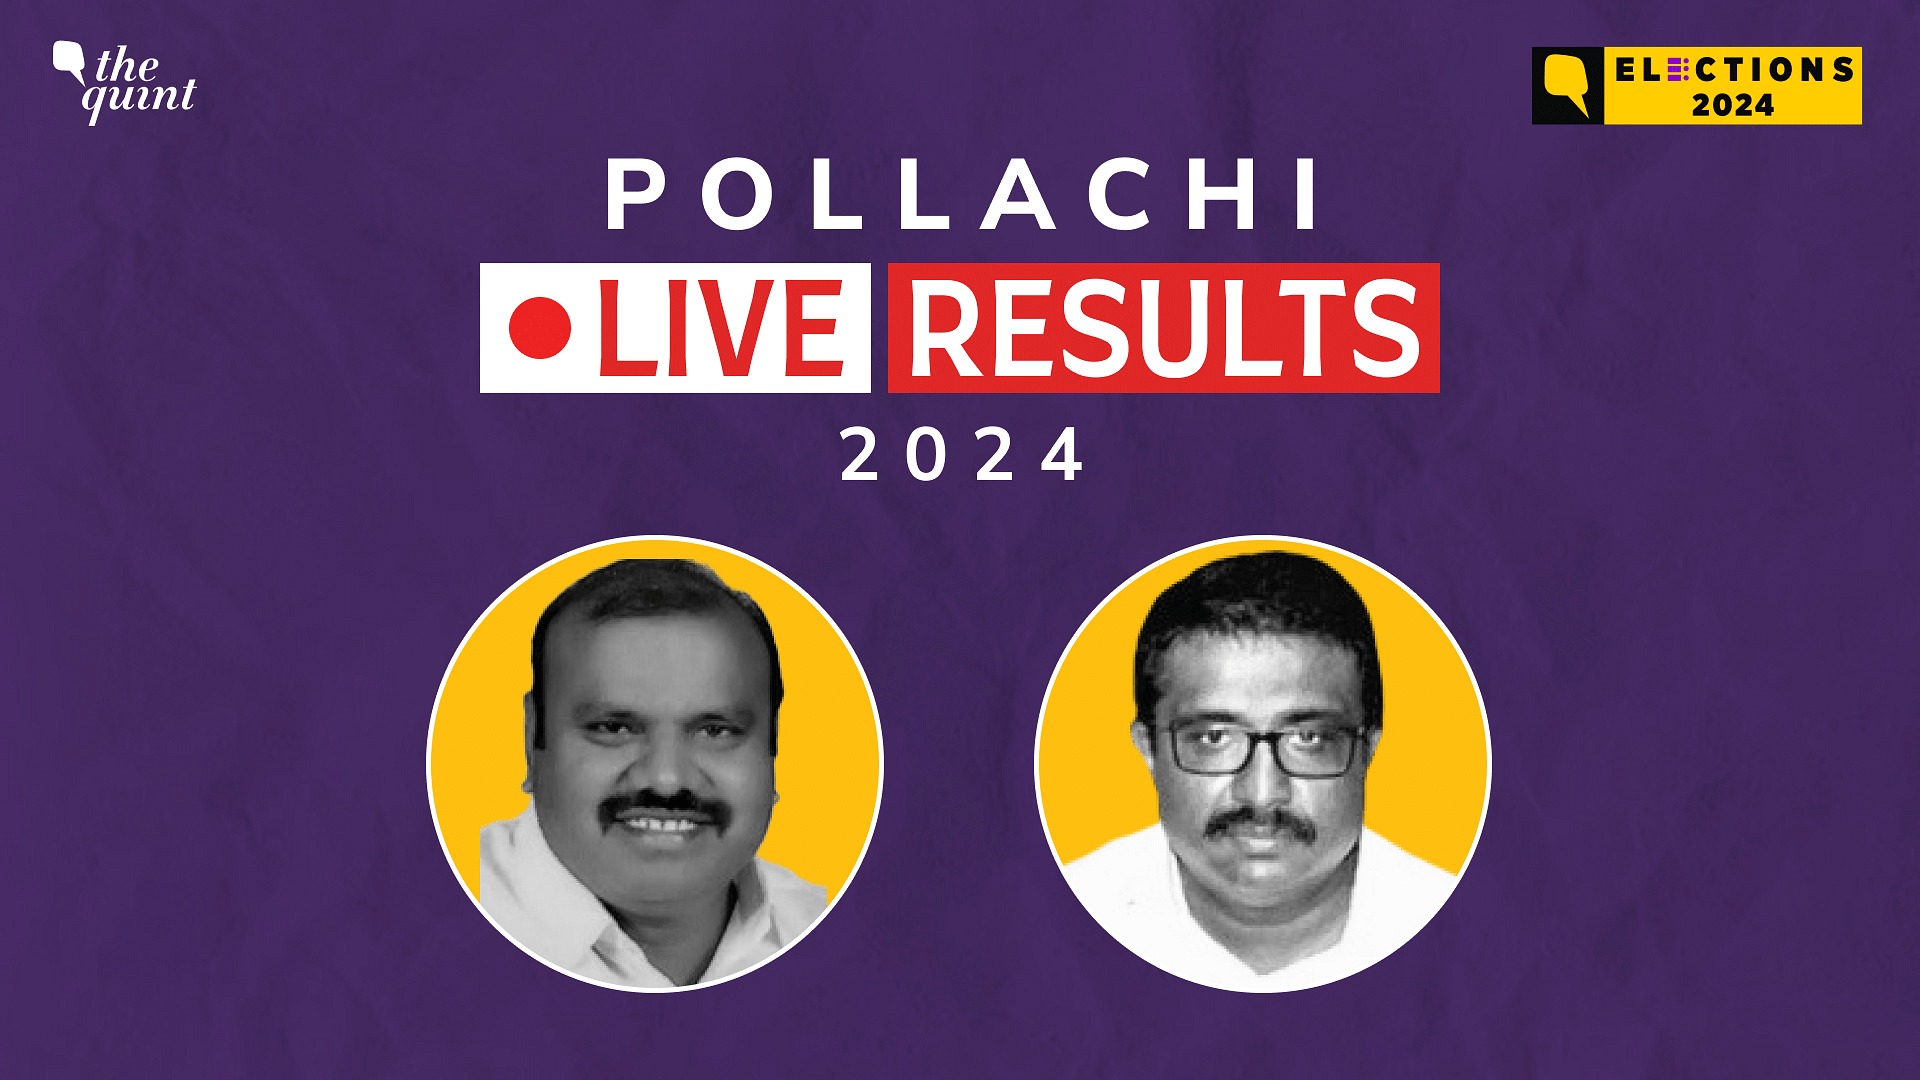 <div class="paragraphs"><p>Pollachi Election Result live updates for Lok Sabha election 2024</p></div>